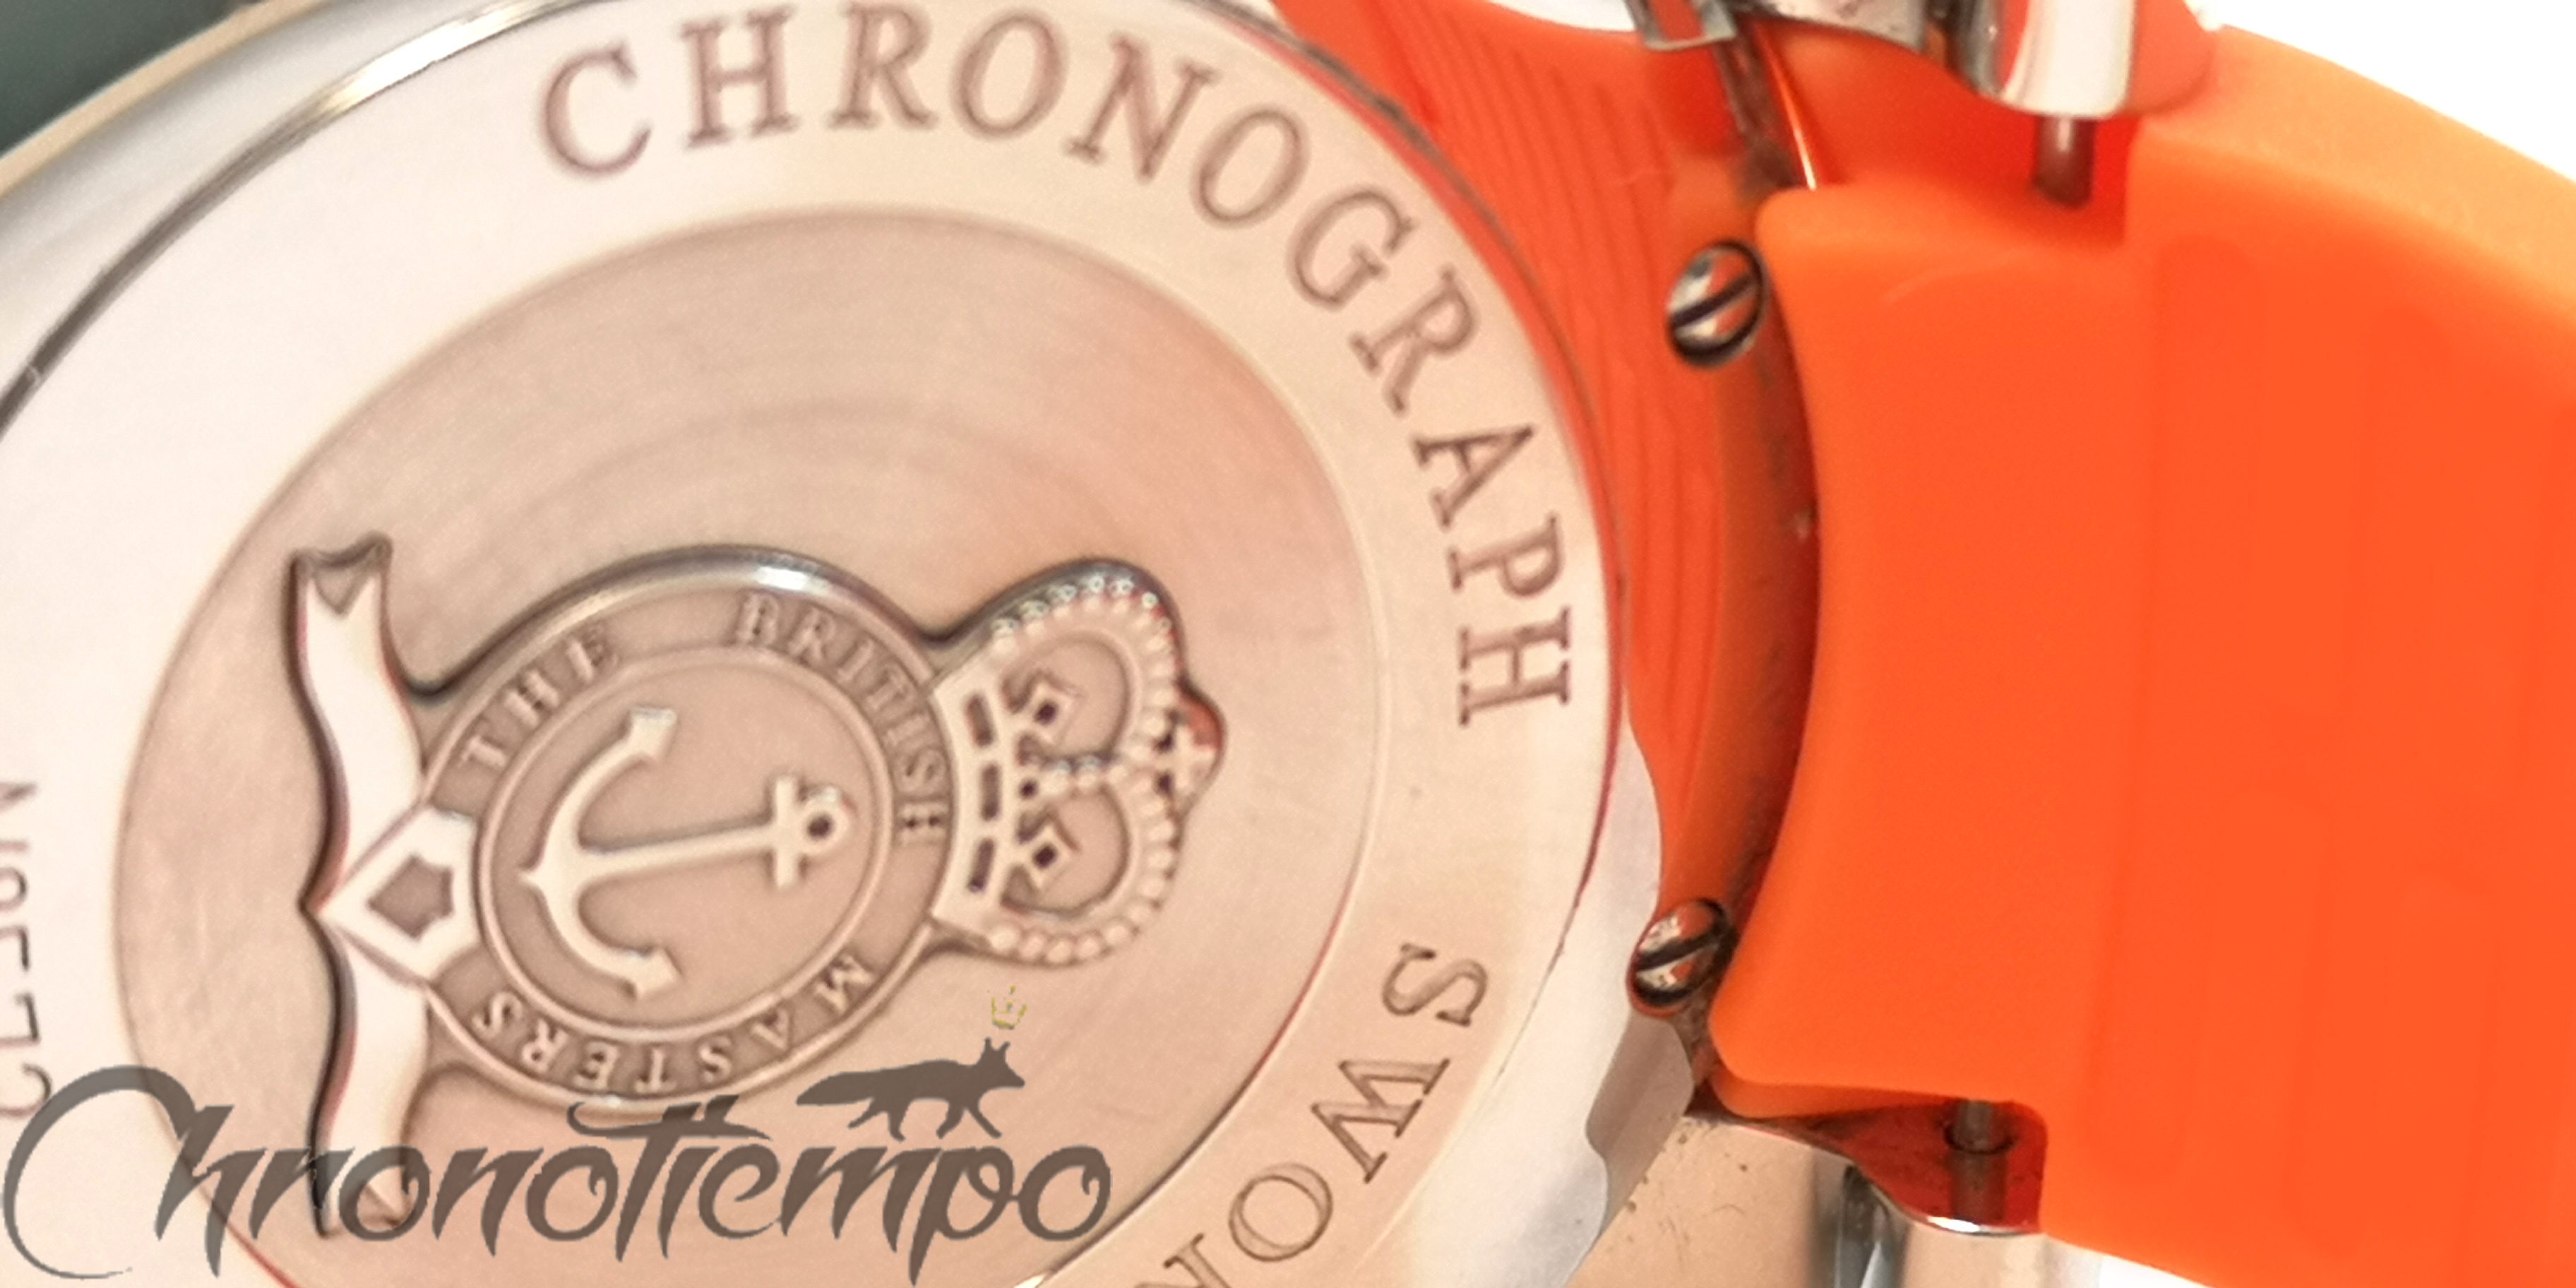 Chronotiempo Curved Orange Silicone Watch Band Strap 22mm For Graham Swordfish Bracelet Free Tools